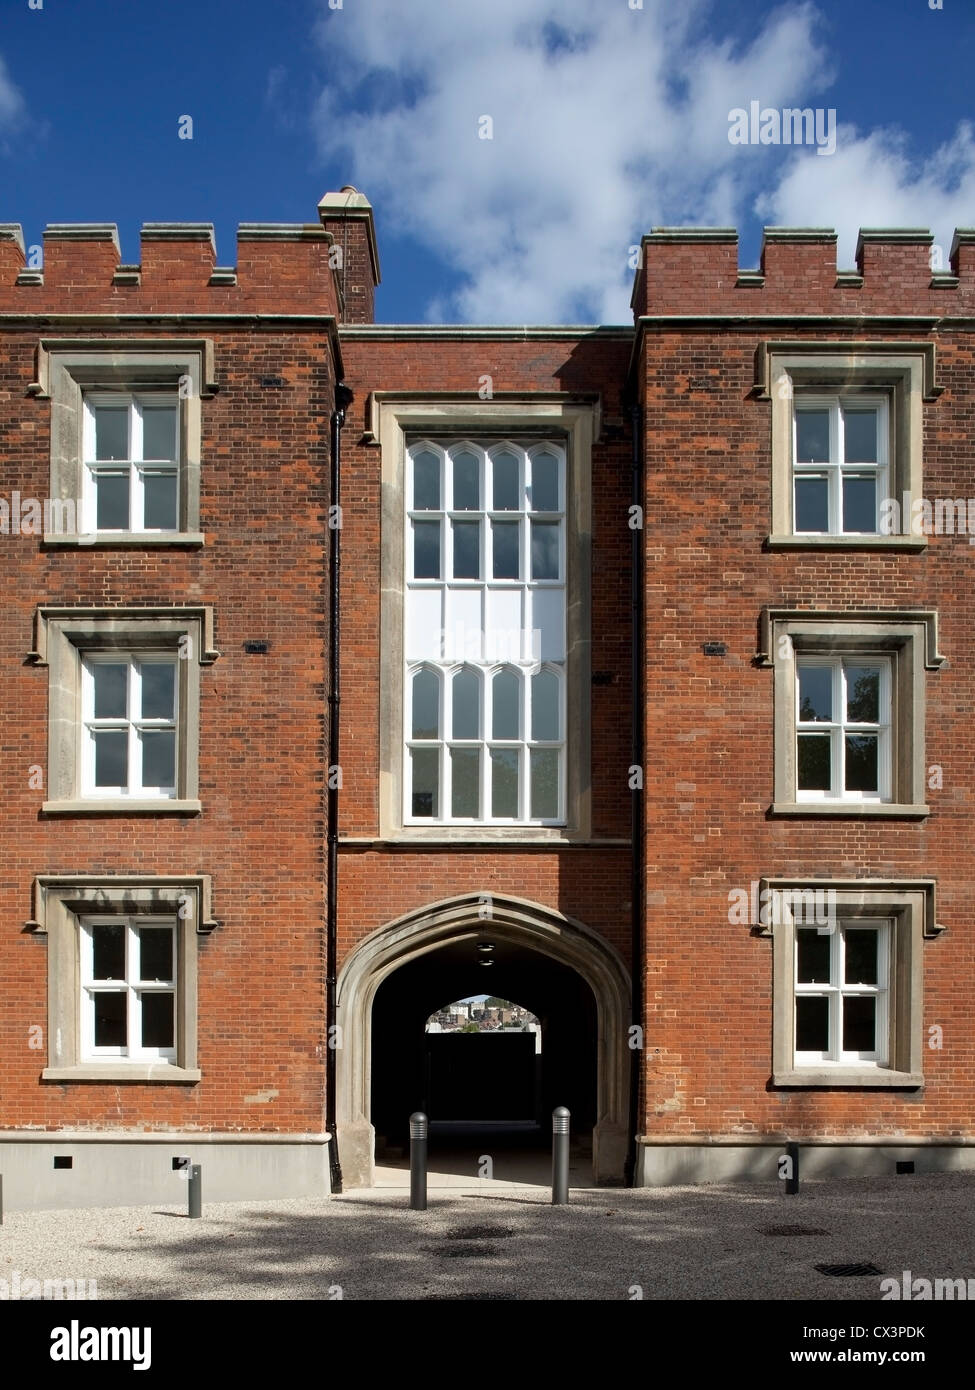 Royal Military Academy, London, United Kingdom. Architect: John McAslan & Partners, 2012. View of renovated part of academy. Stock Photo